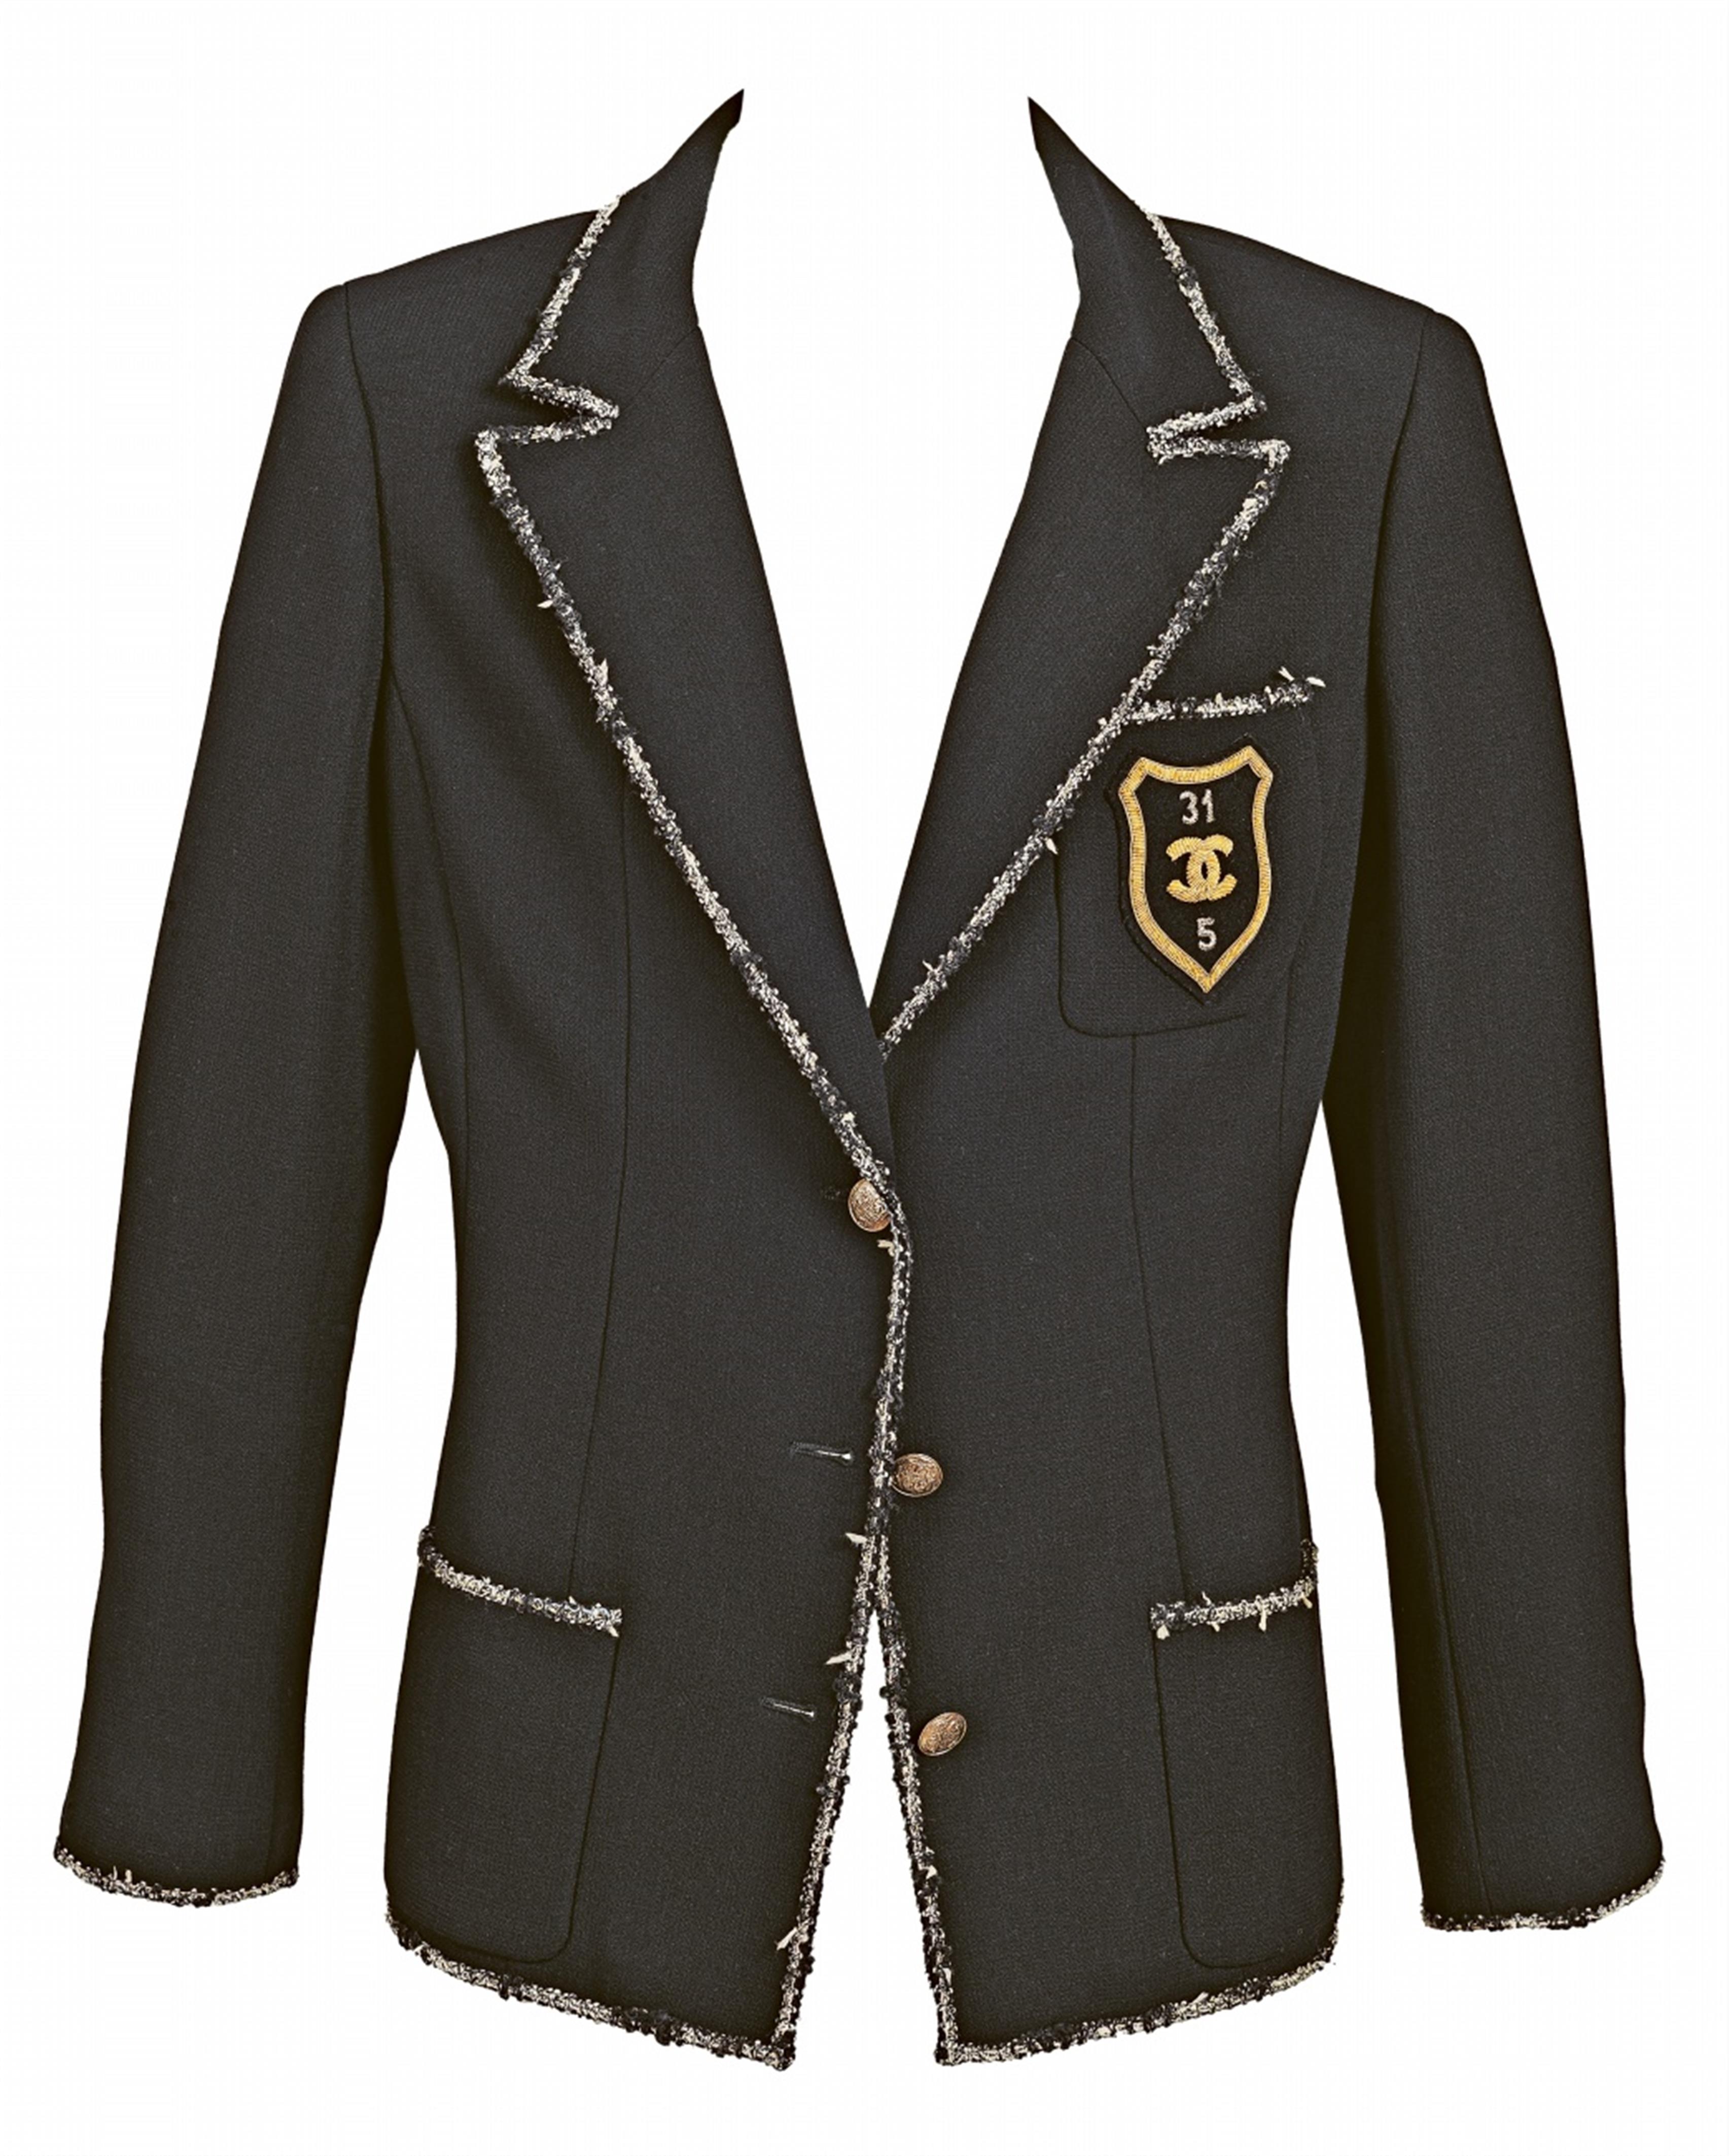 A Chanel men's blazer, Summer 2005 - Lot 113